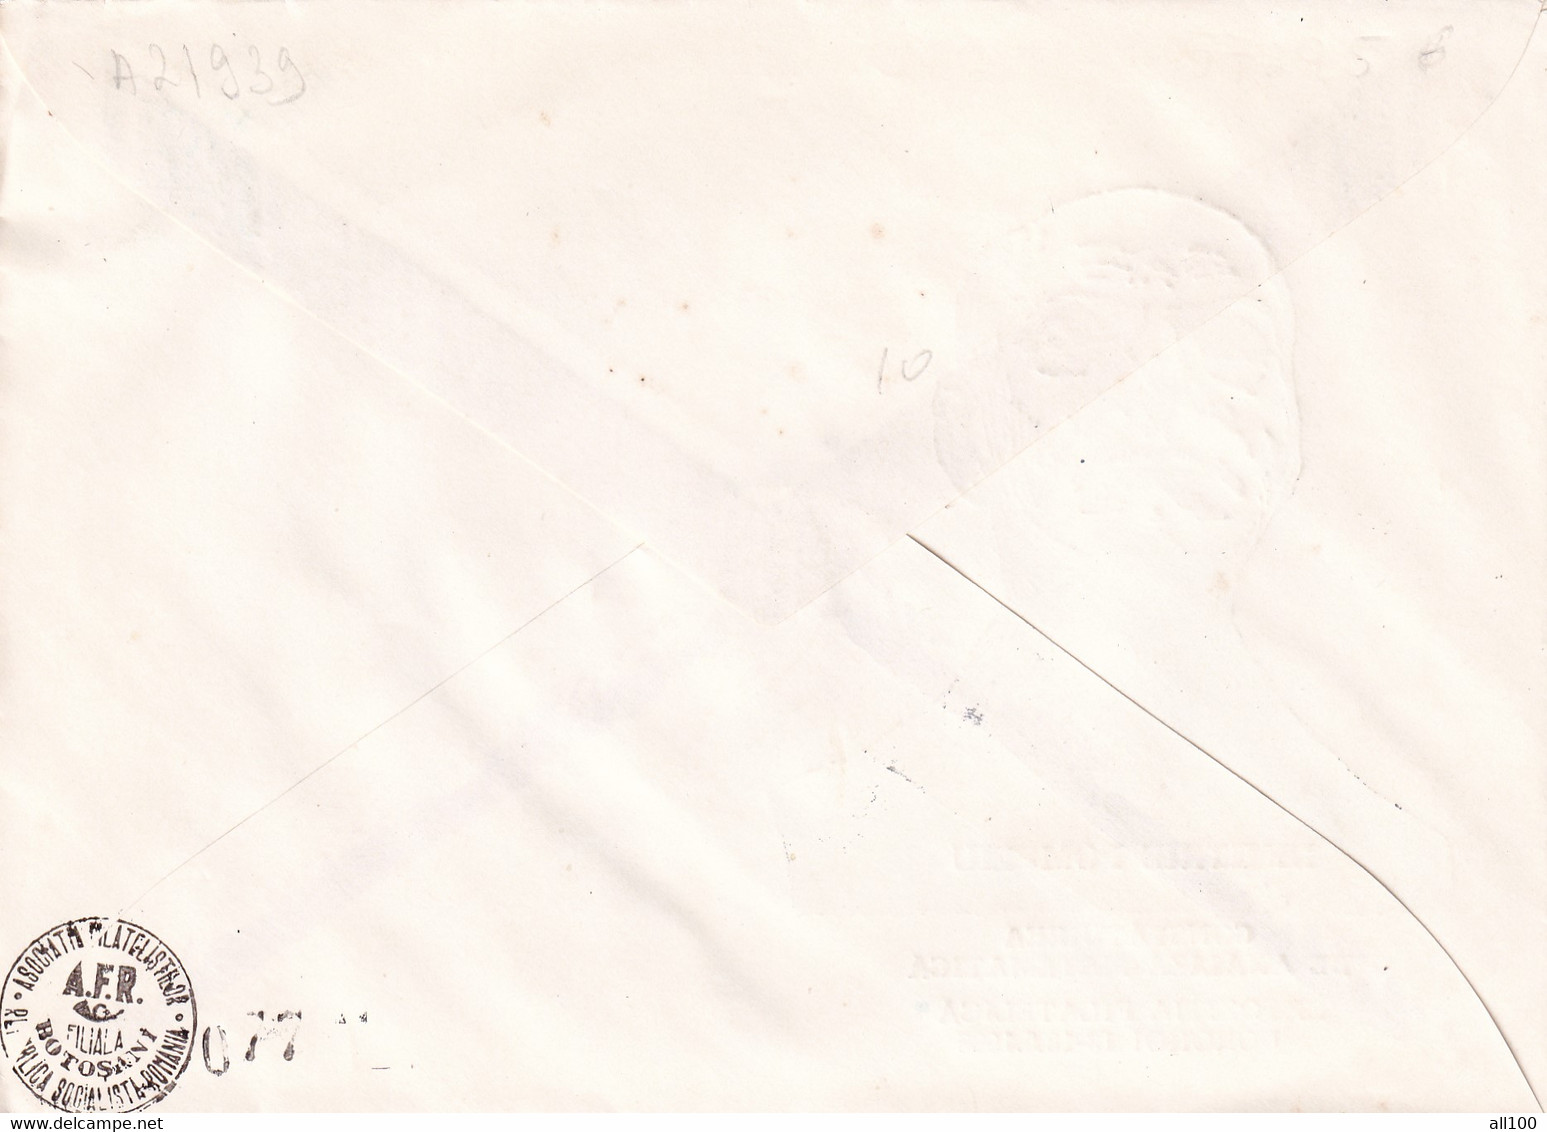 A21939 - Dimitrie Pompeiu Consfatuirea De Analiza Matematica Expozitia Filatelica Dorohoi Cover Envelope Used 1985 RSR - Covers & Documents